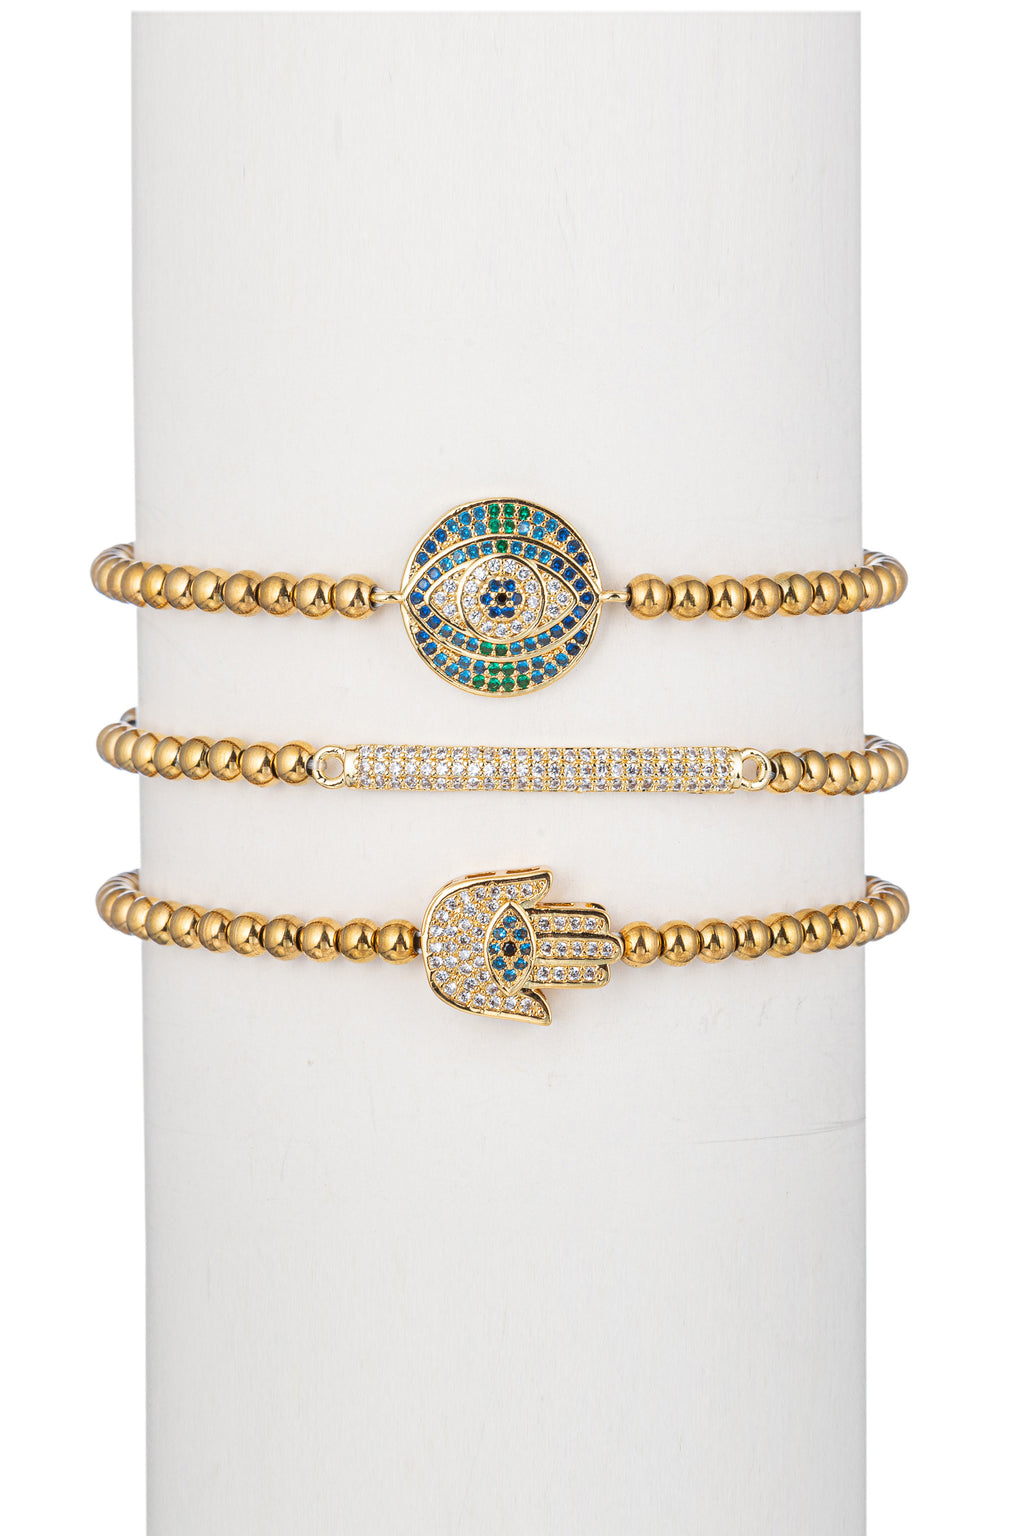 Gold titanium hamsa and evil eye beaded bracelet set studded with CZ crystals.